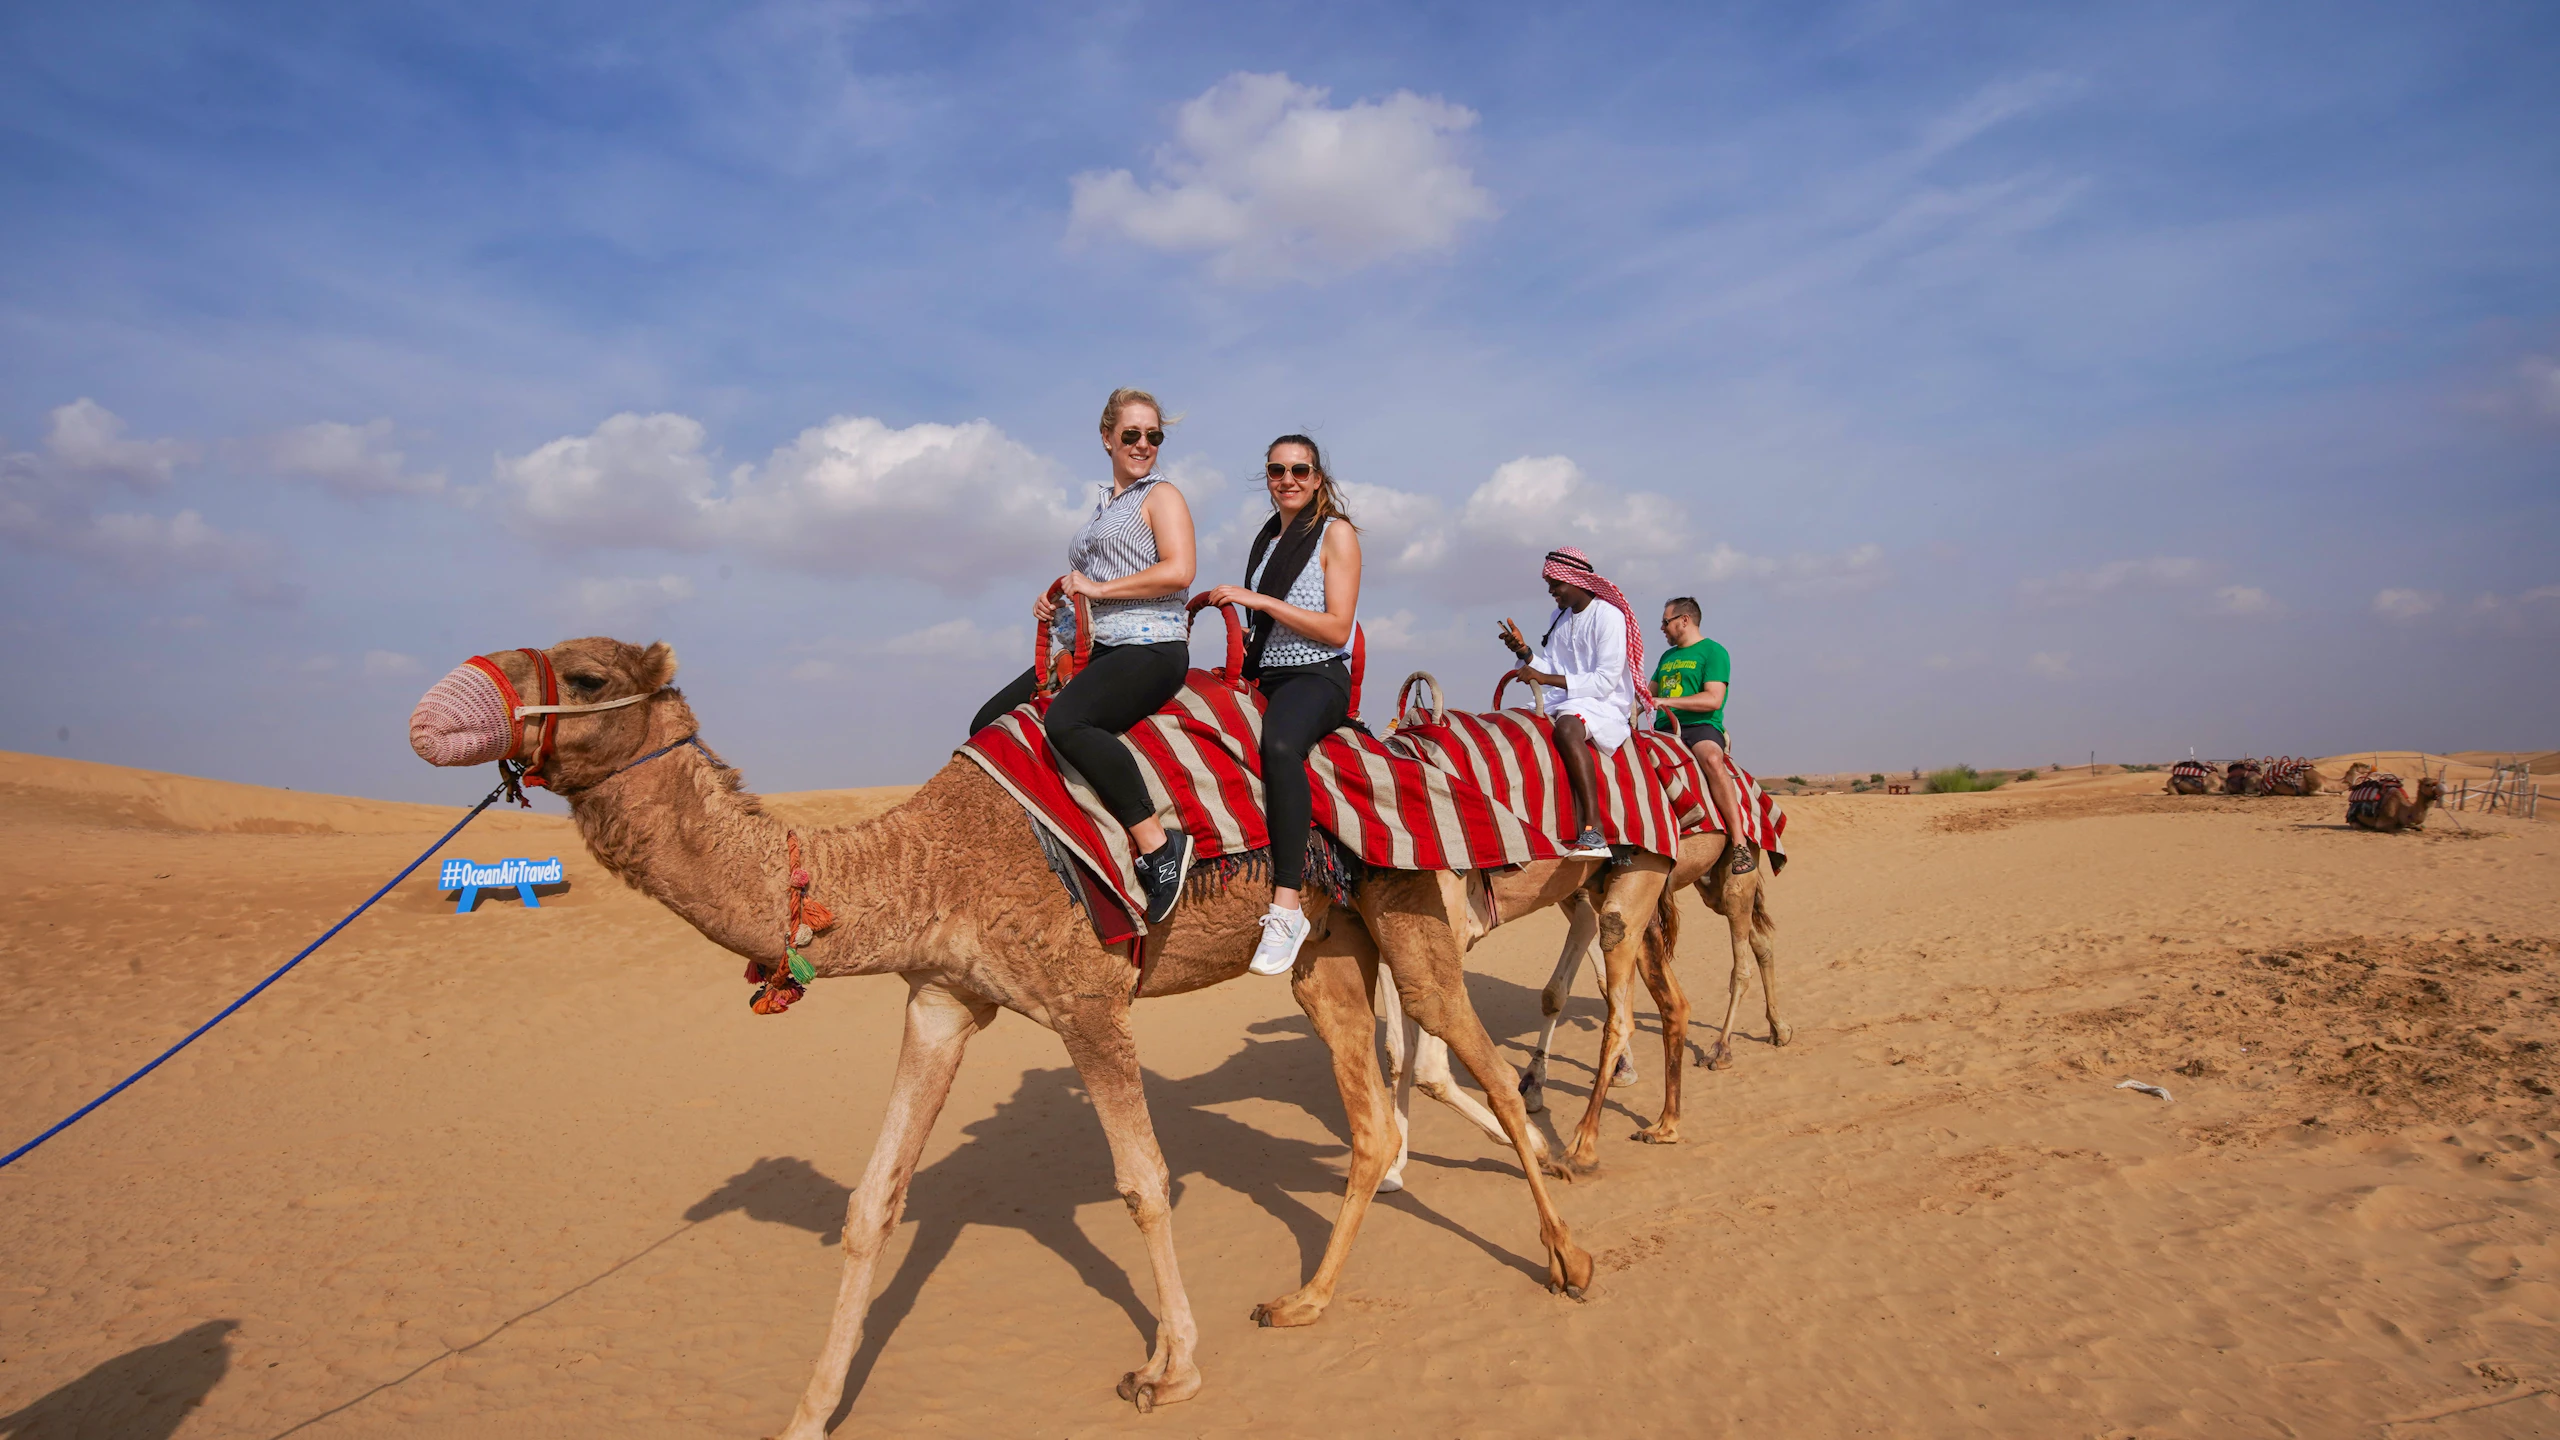 Morning Desert Safari Dubai: Dune Bashing, Sand Boarding, Camel Ride with Brunch Price